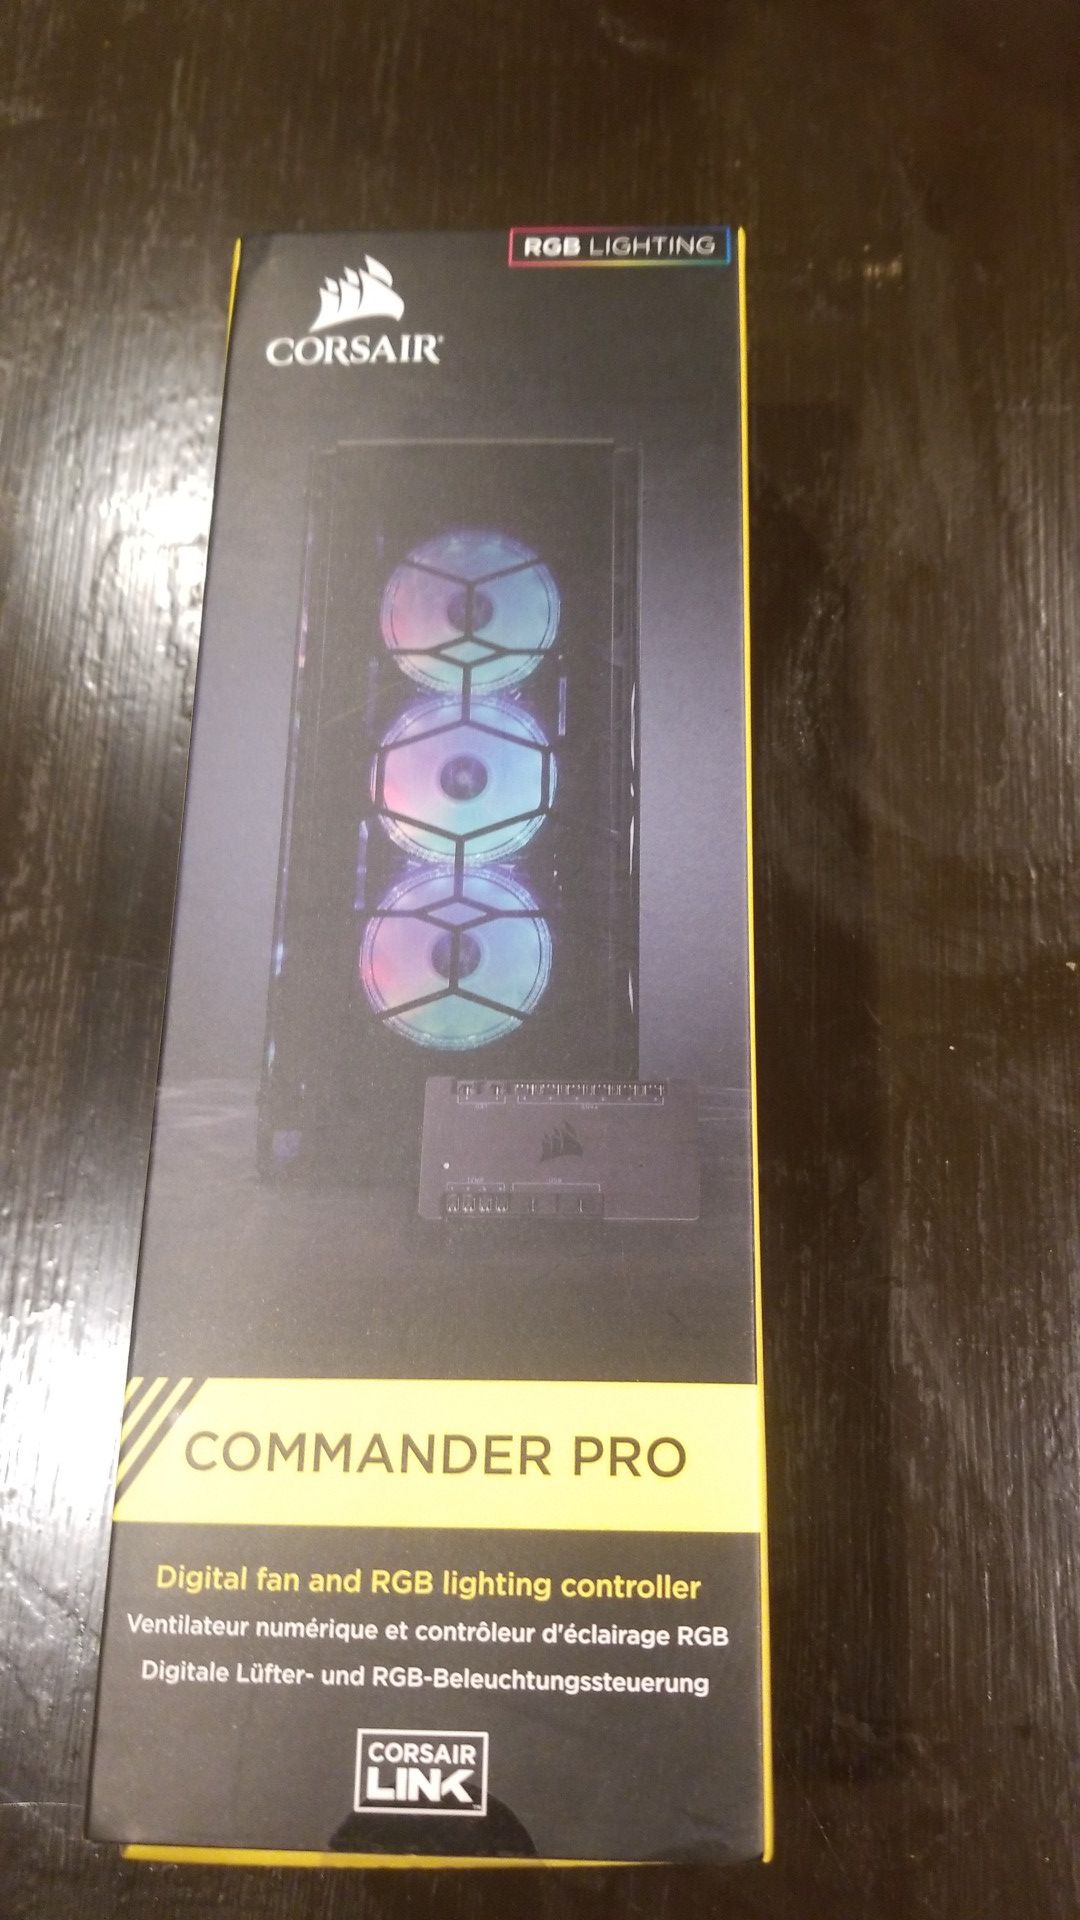 Corsair Commander Pro Digital Fan amd RGB LIGHTING CONTROLLER